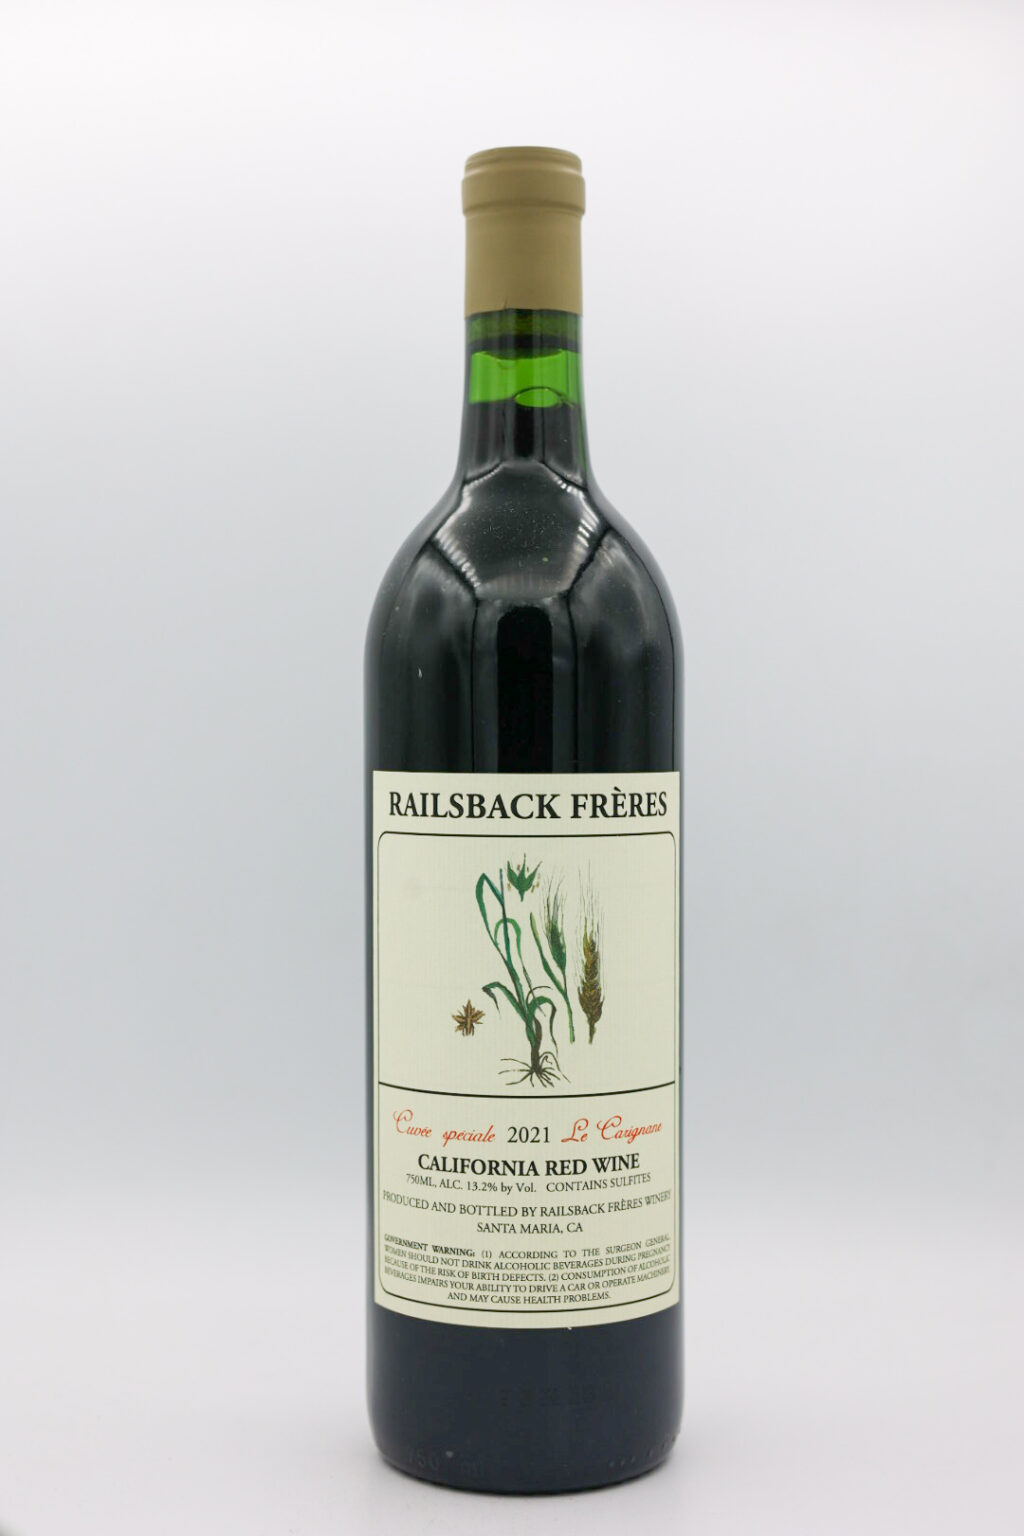 Railsback Freres Cuvee Speciale Le Carignane California Red Wine 2021